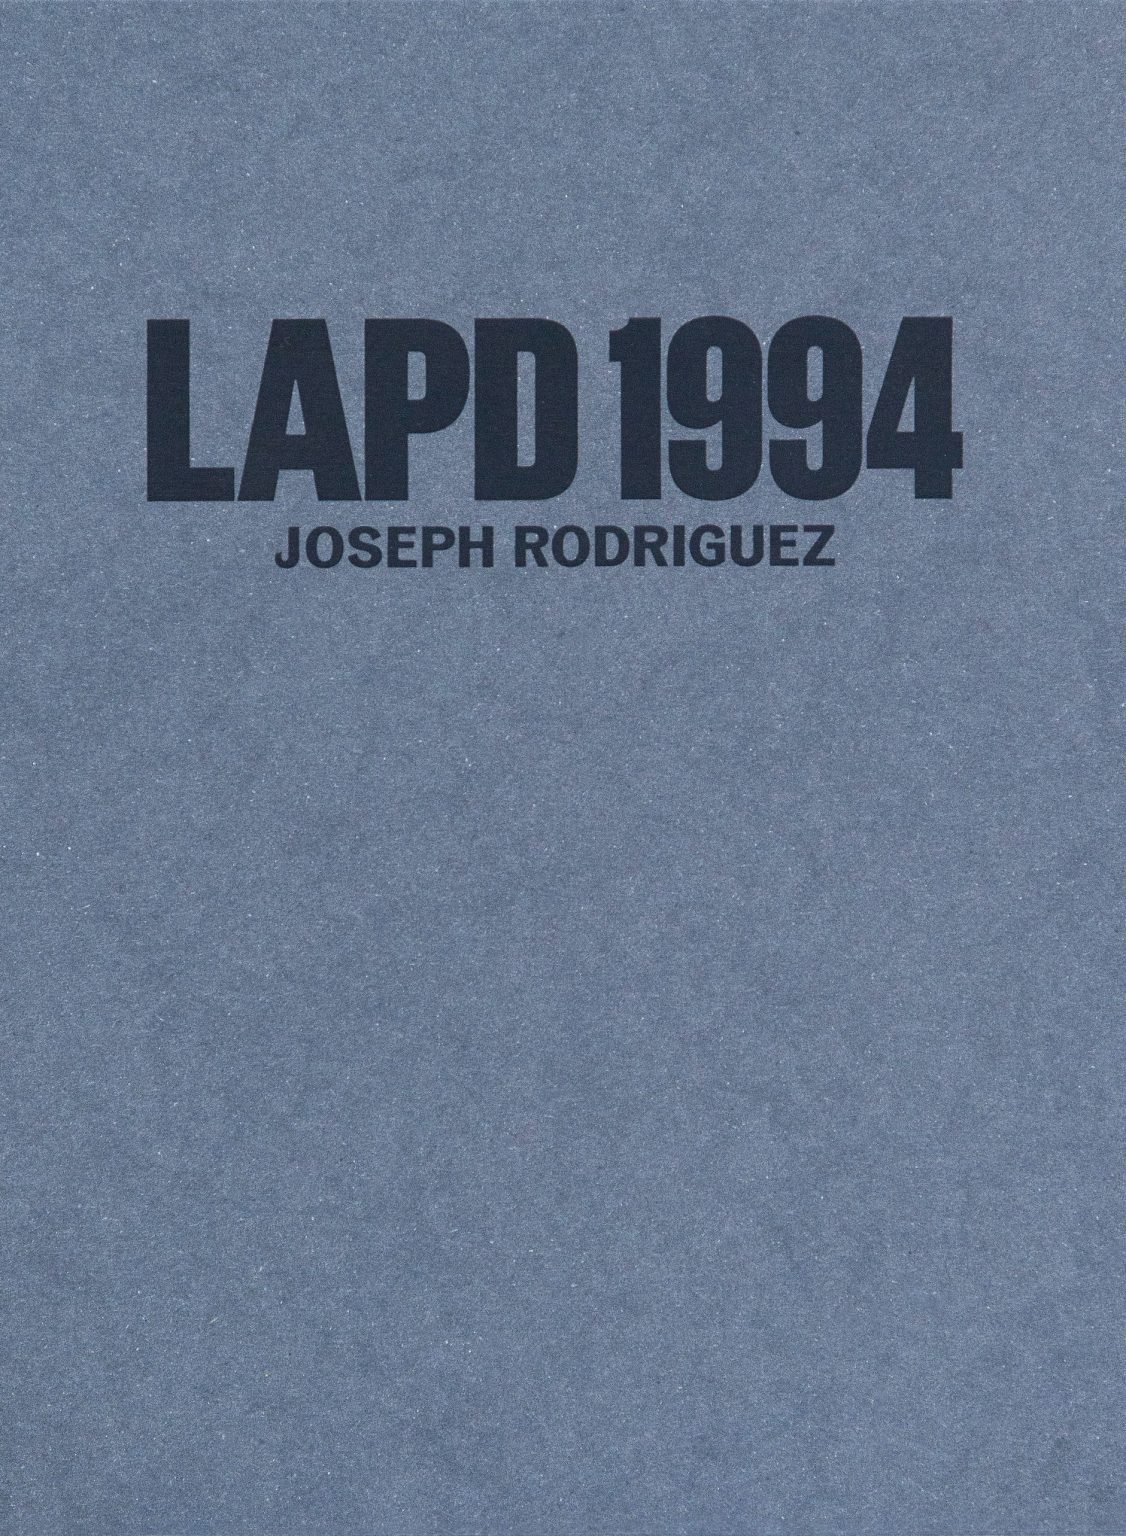 Collectors Edition 'LAPD 1994'